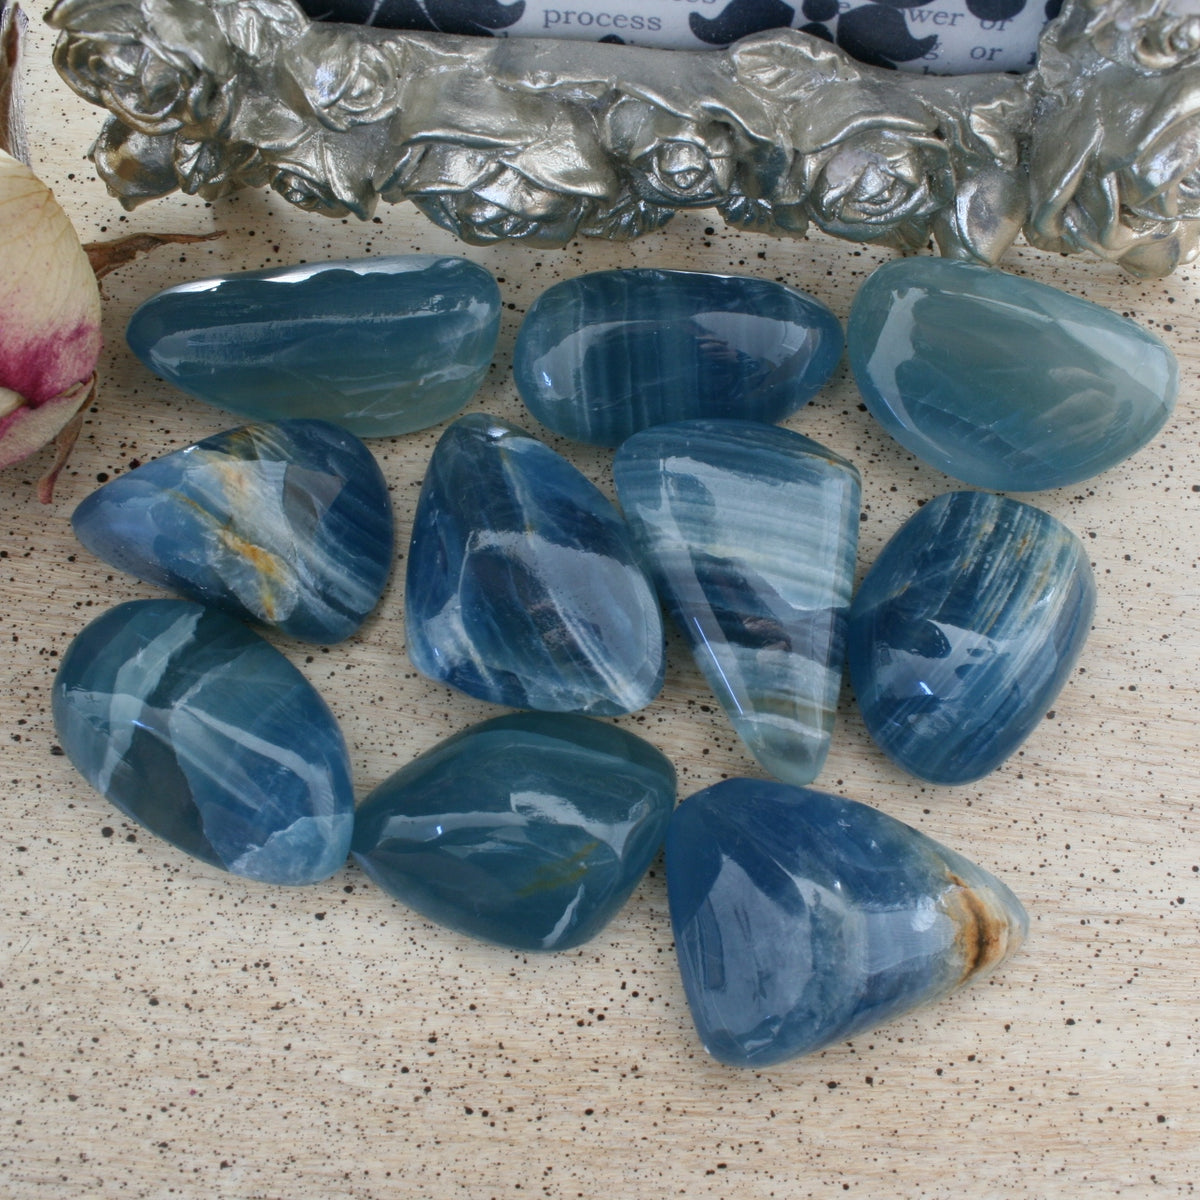 Blue Calcite / Blue Onyx Tumbled Stone from Argentina, also called Lemurian Aquatine Calcite, TUM13